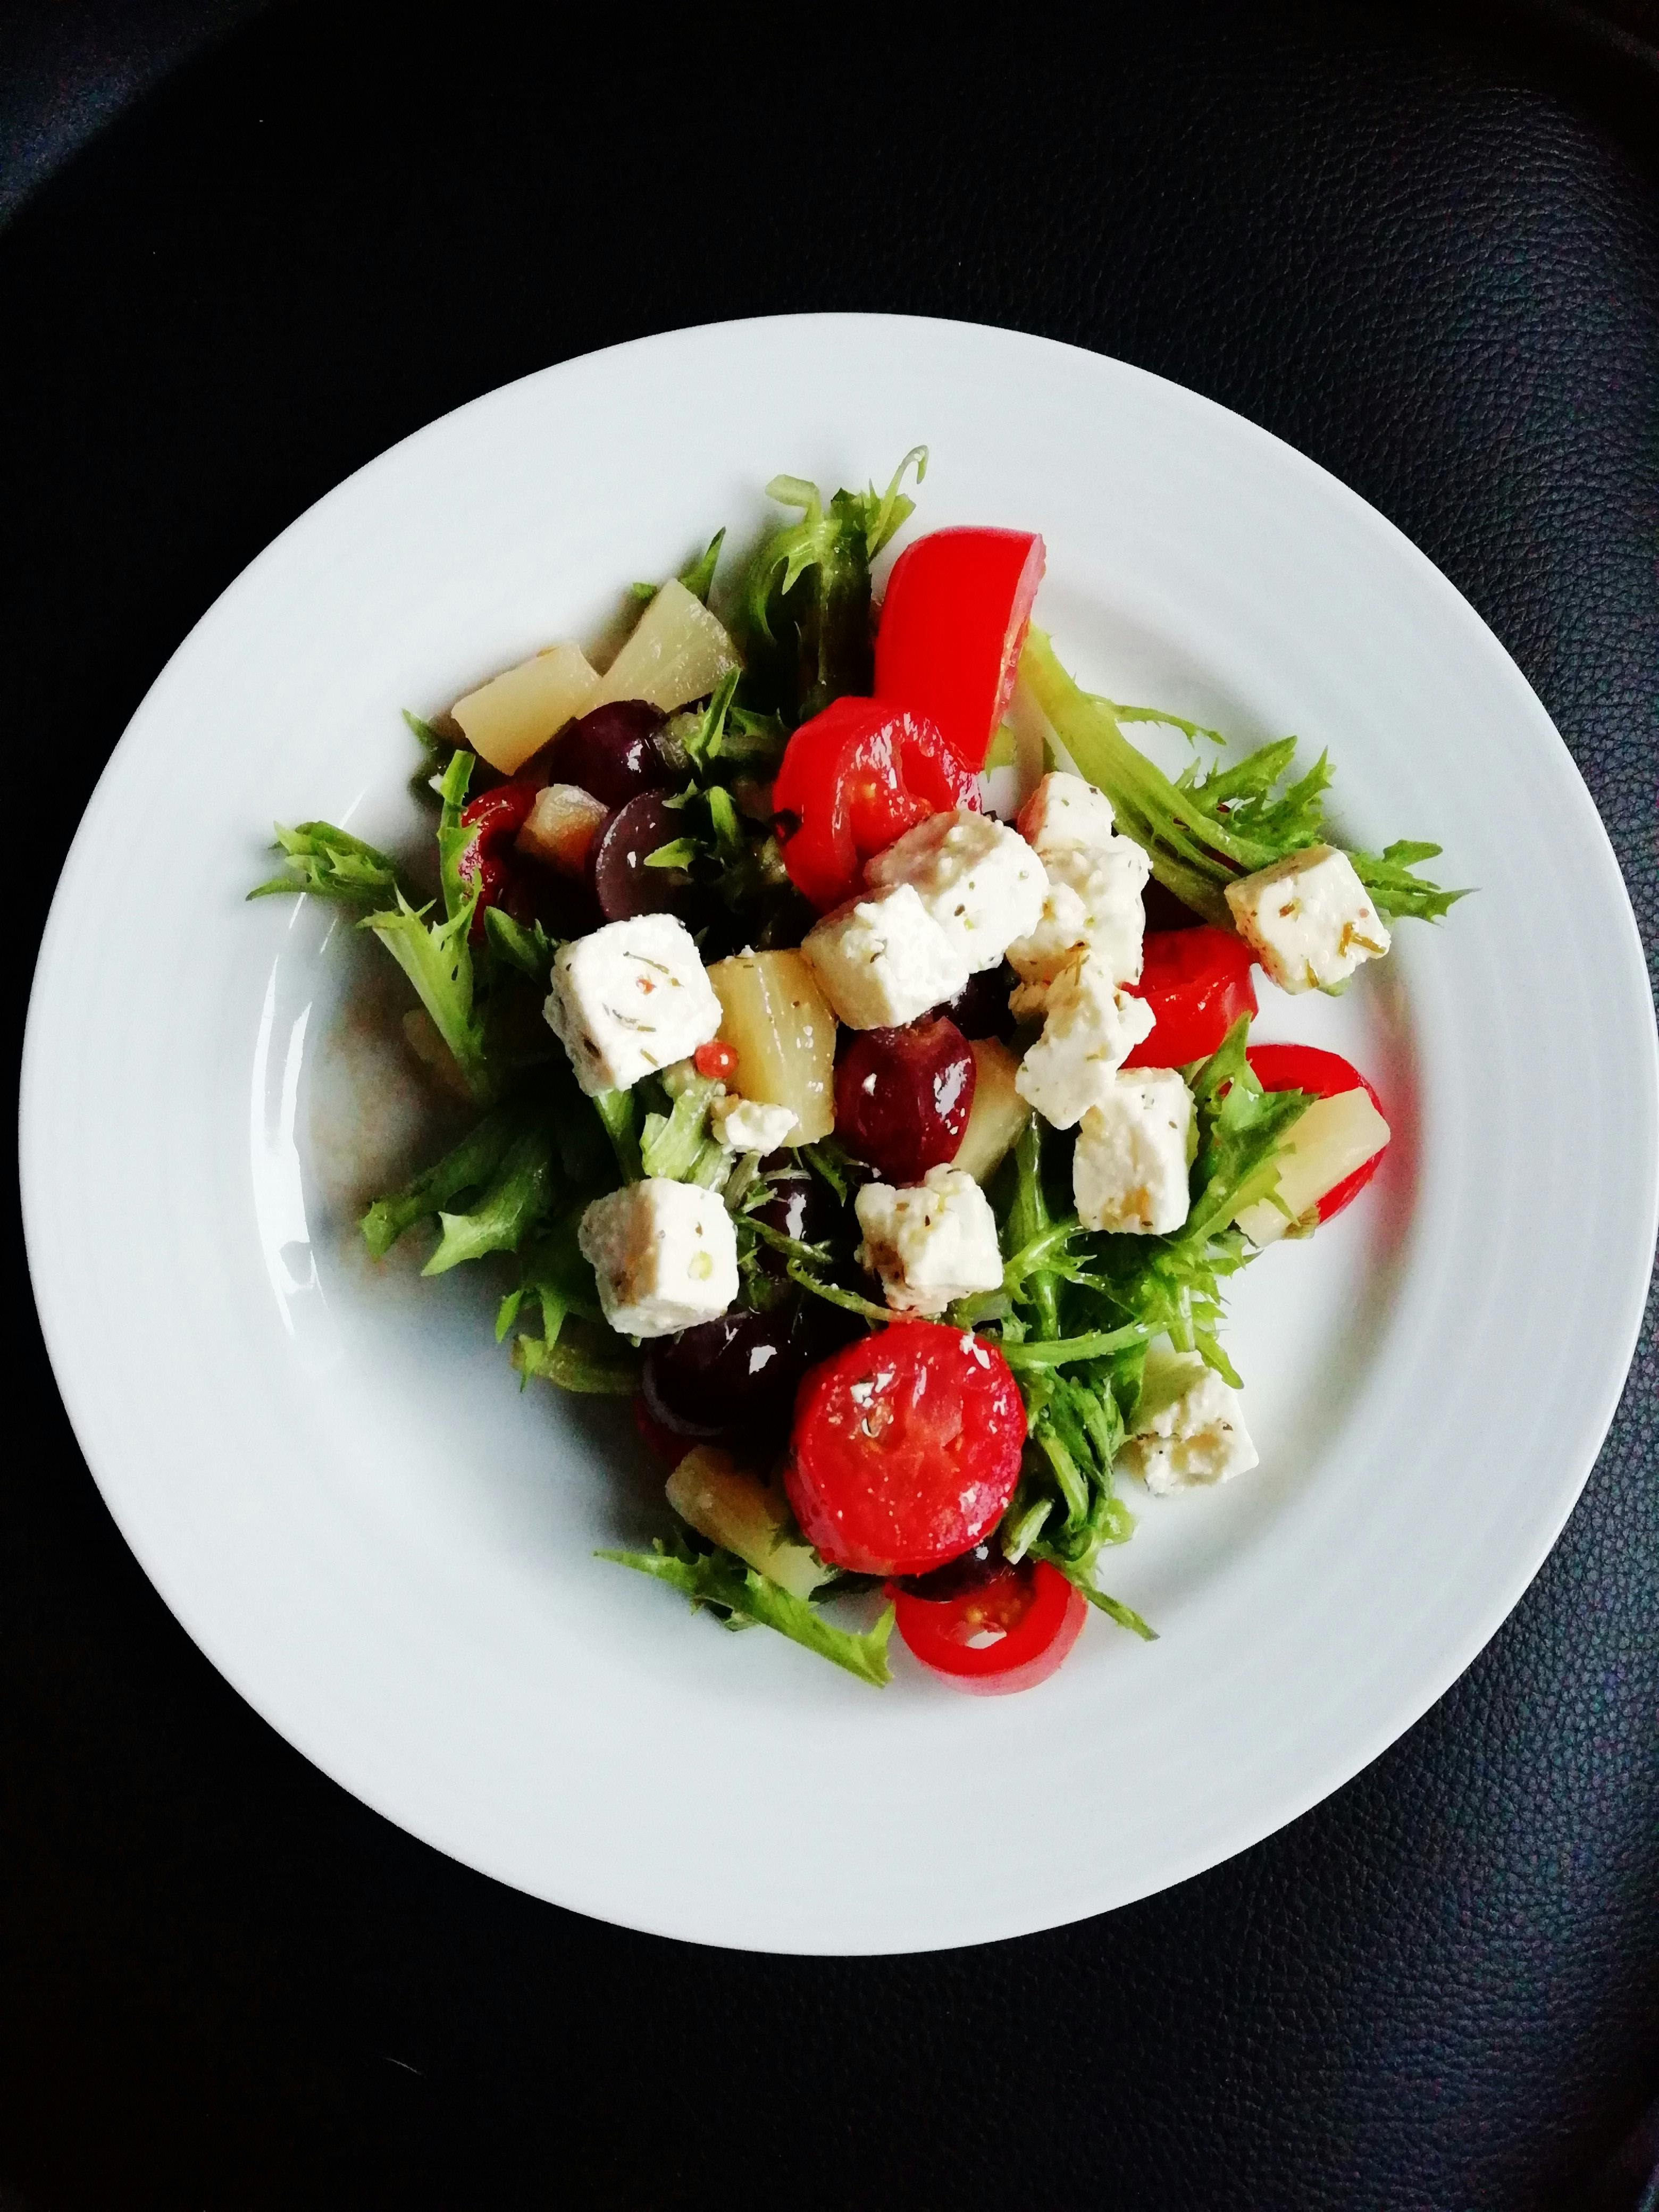 A plate of salad | Source: Pexels